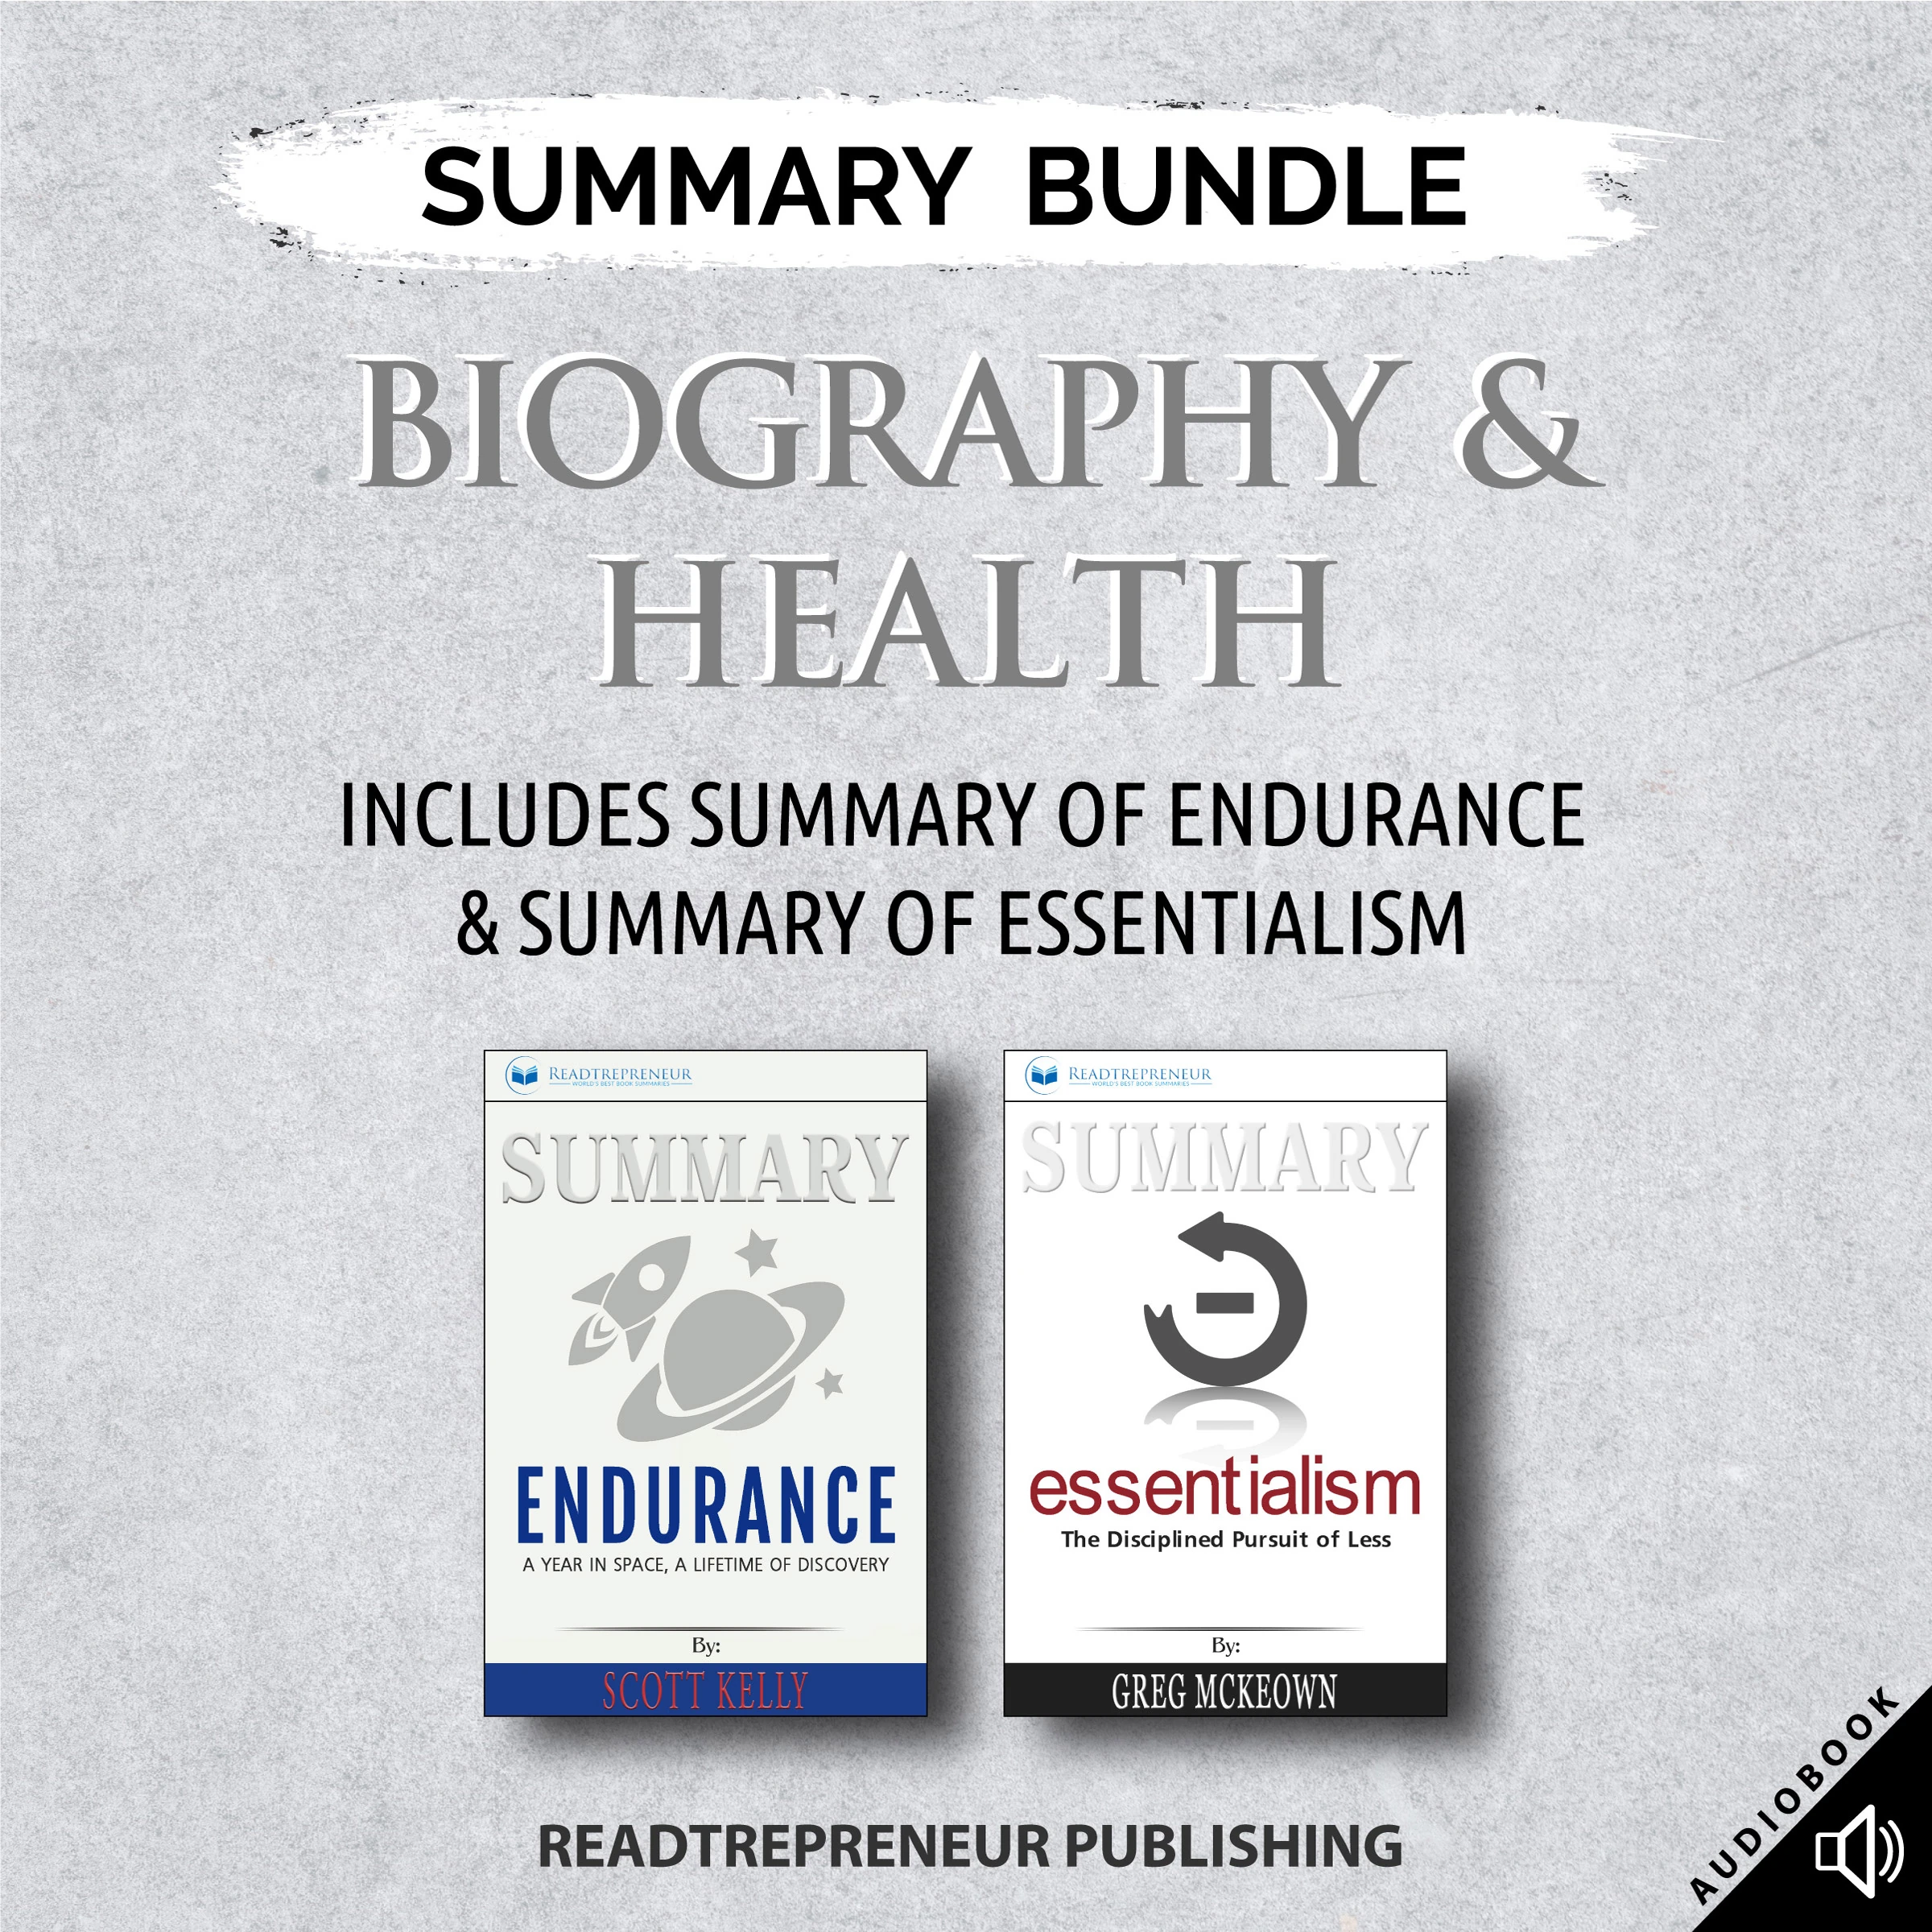 Summary Bundle: Biography & Health | Readtrepreneur Publishing: Includes Summary of Endurance & Summary of Essentialism Audiobook by Readtrepreneur Publishing